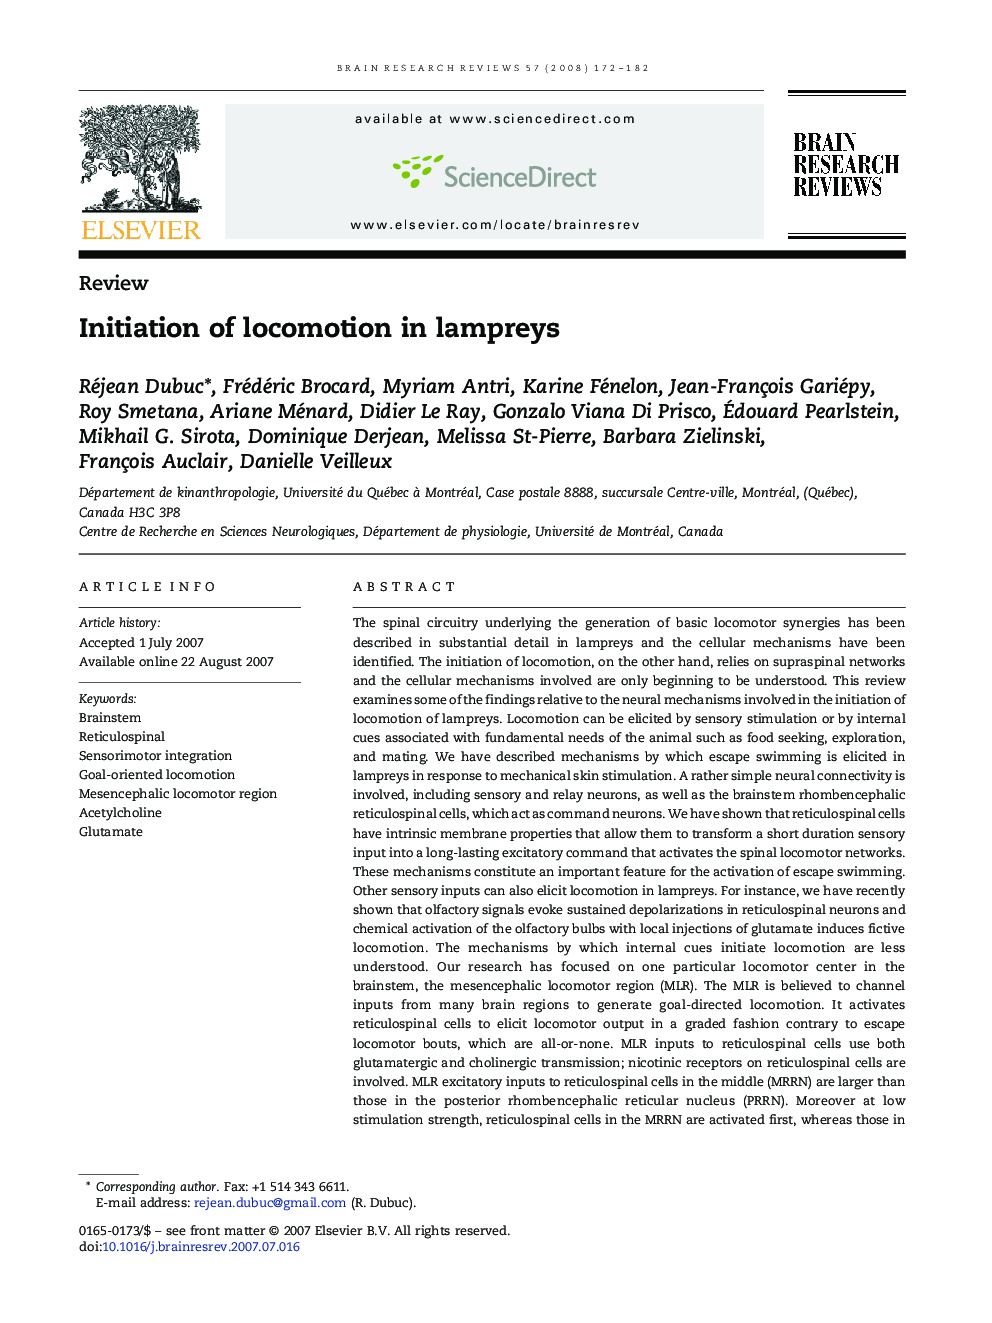 Initiation of locomotion in lampreys